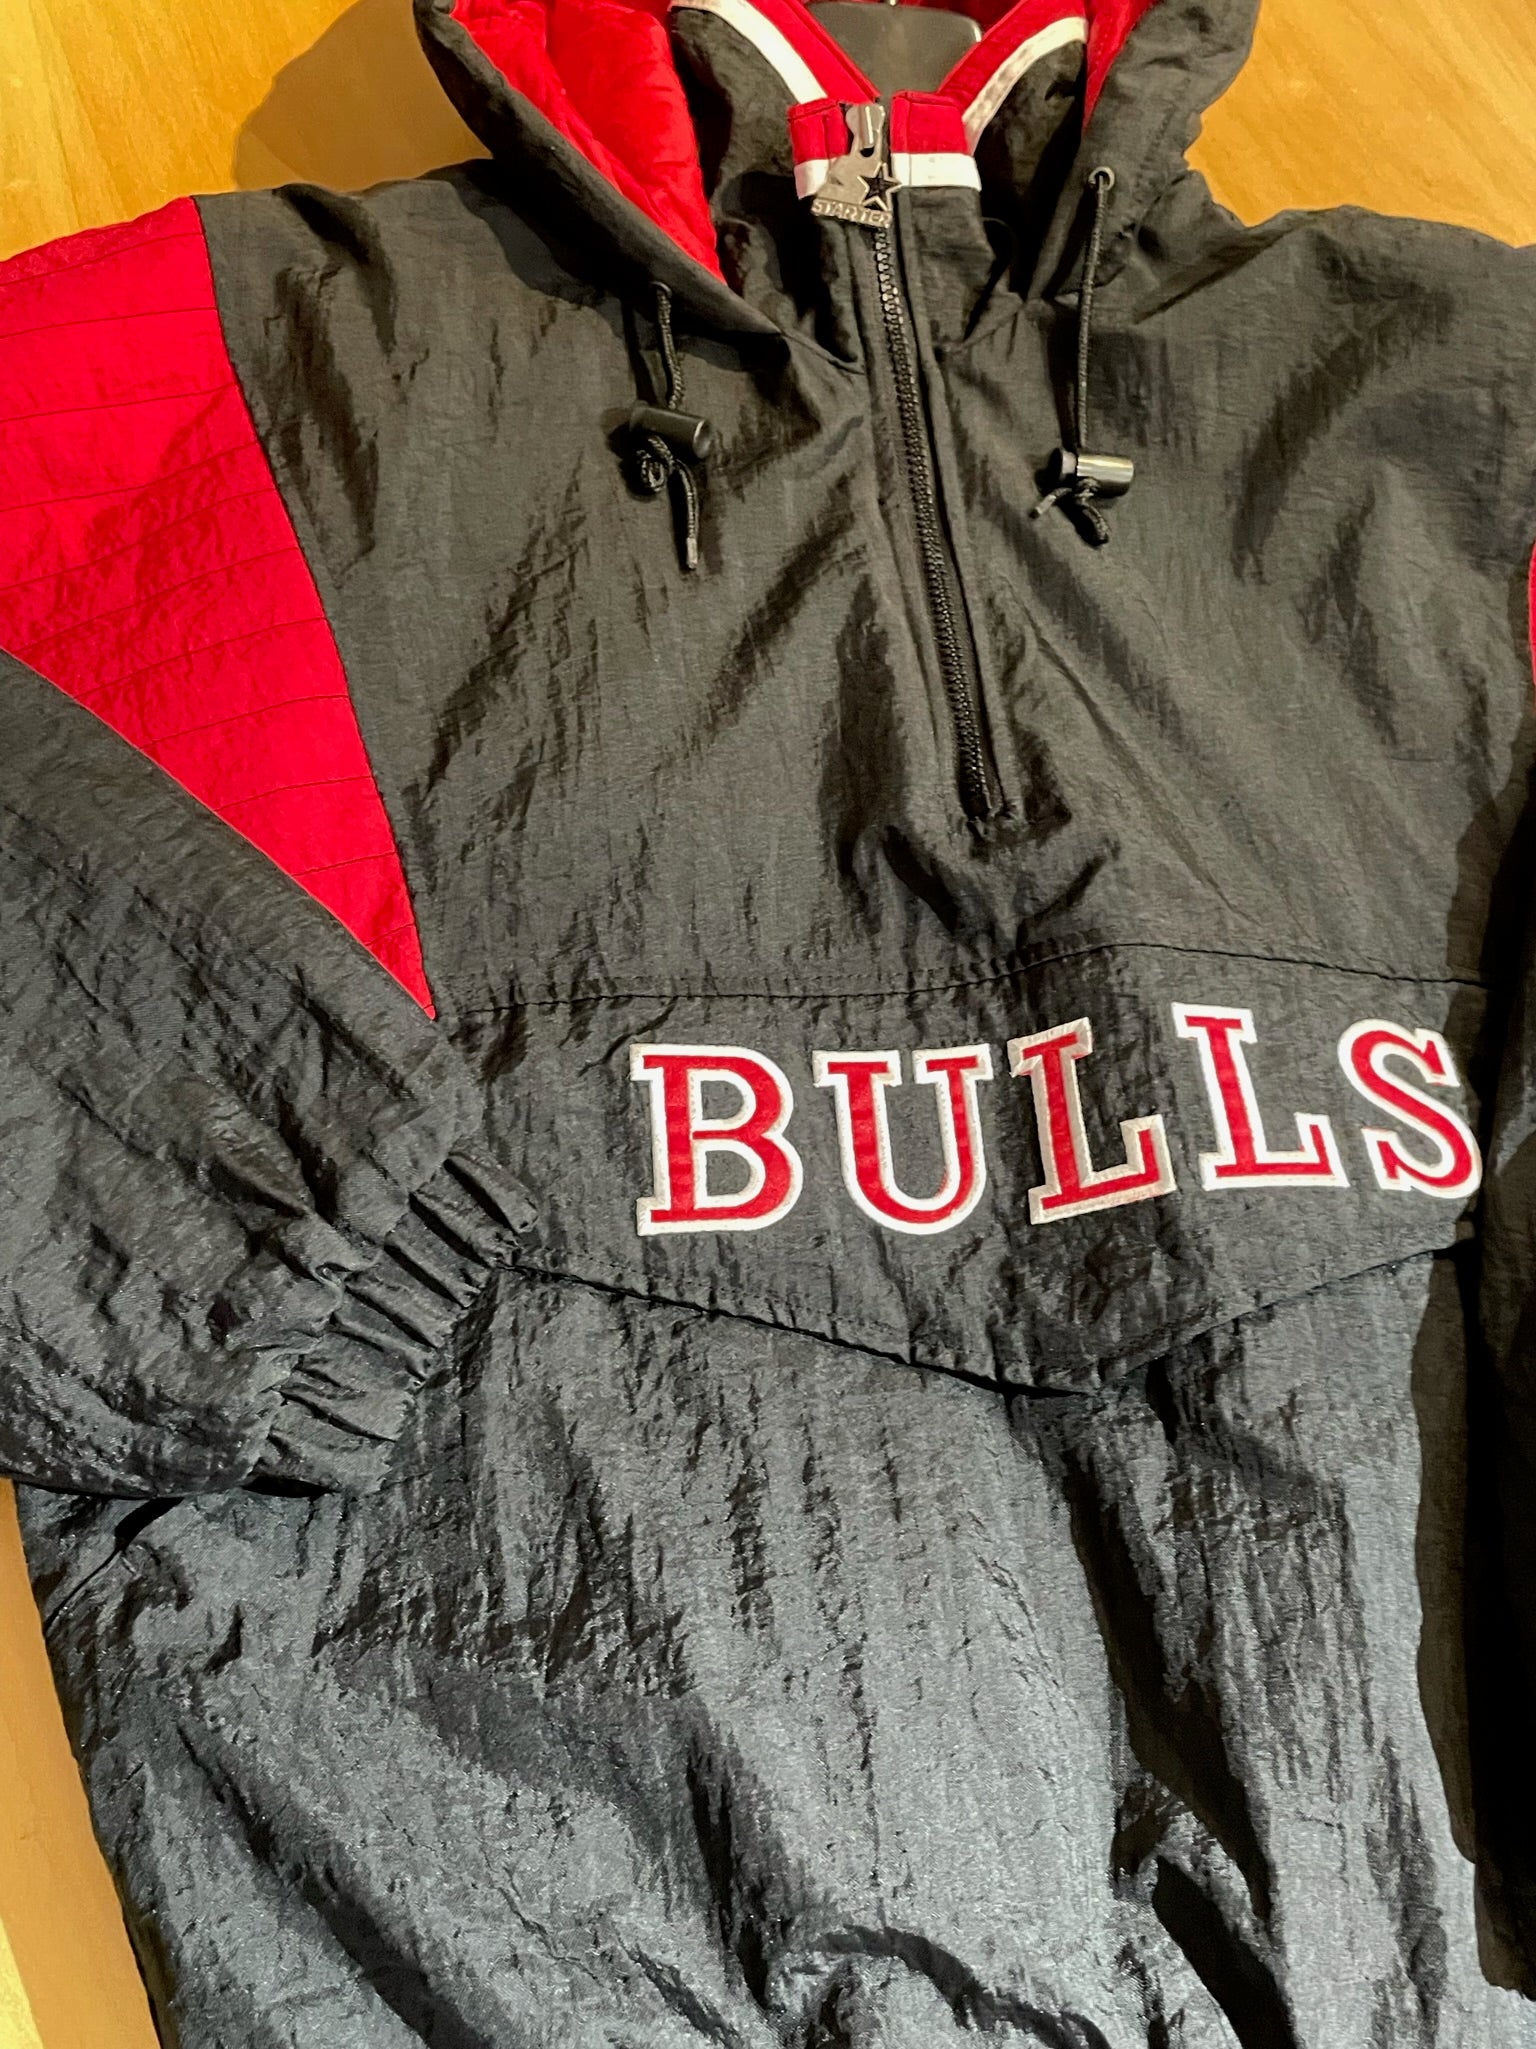 Chicago Bulls 90s Original Starter Jacket Size Large